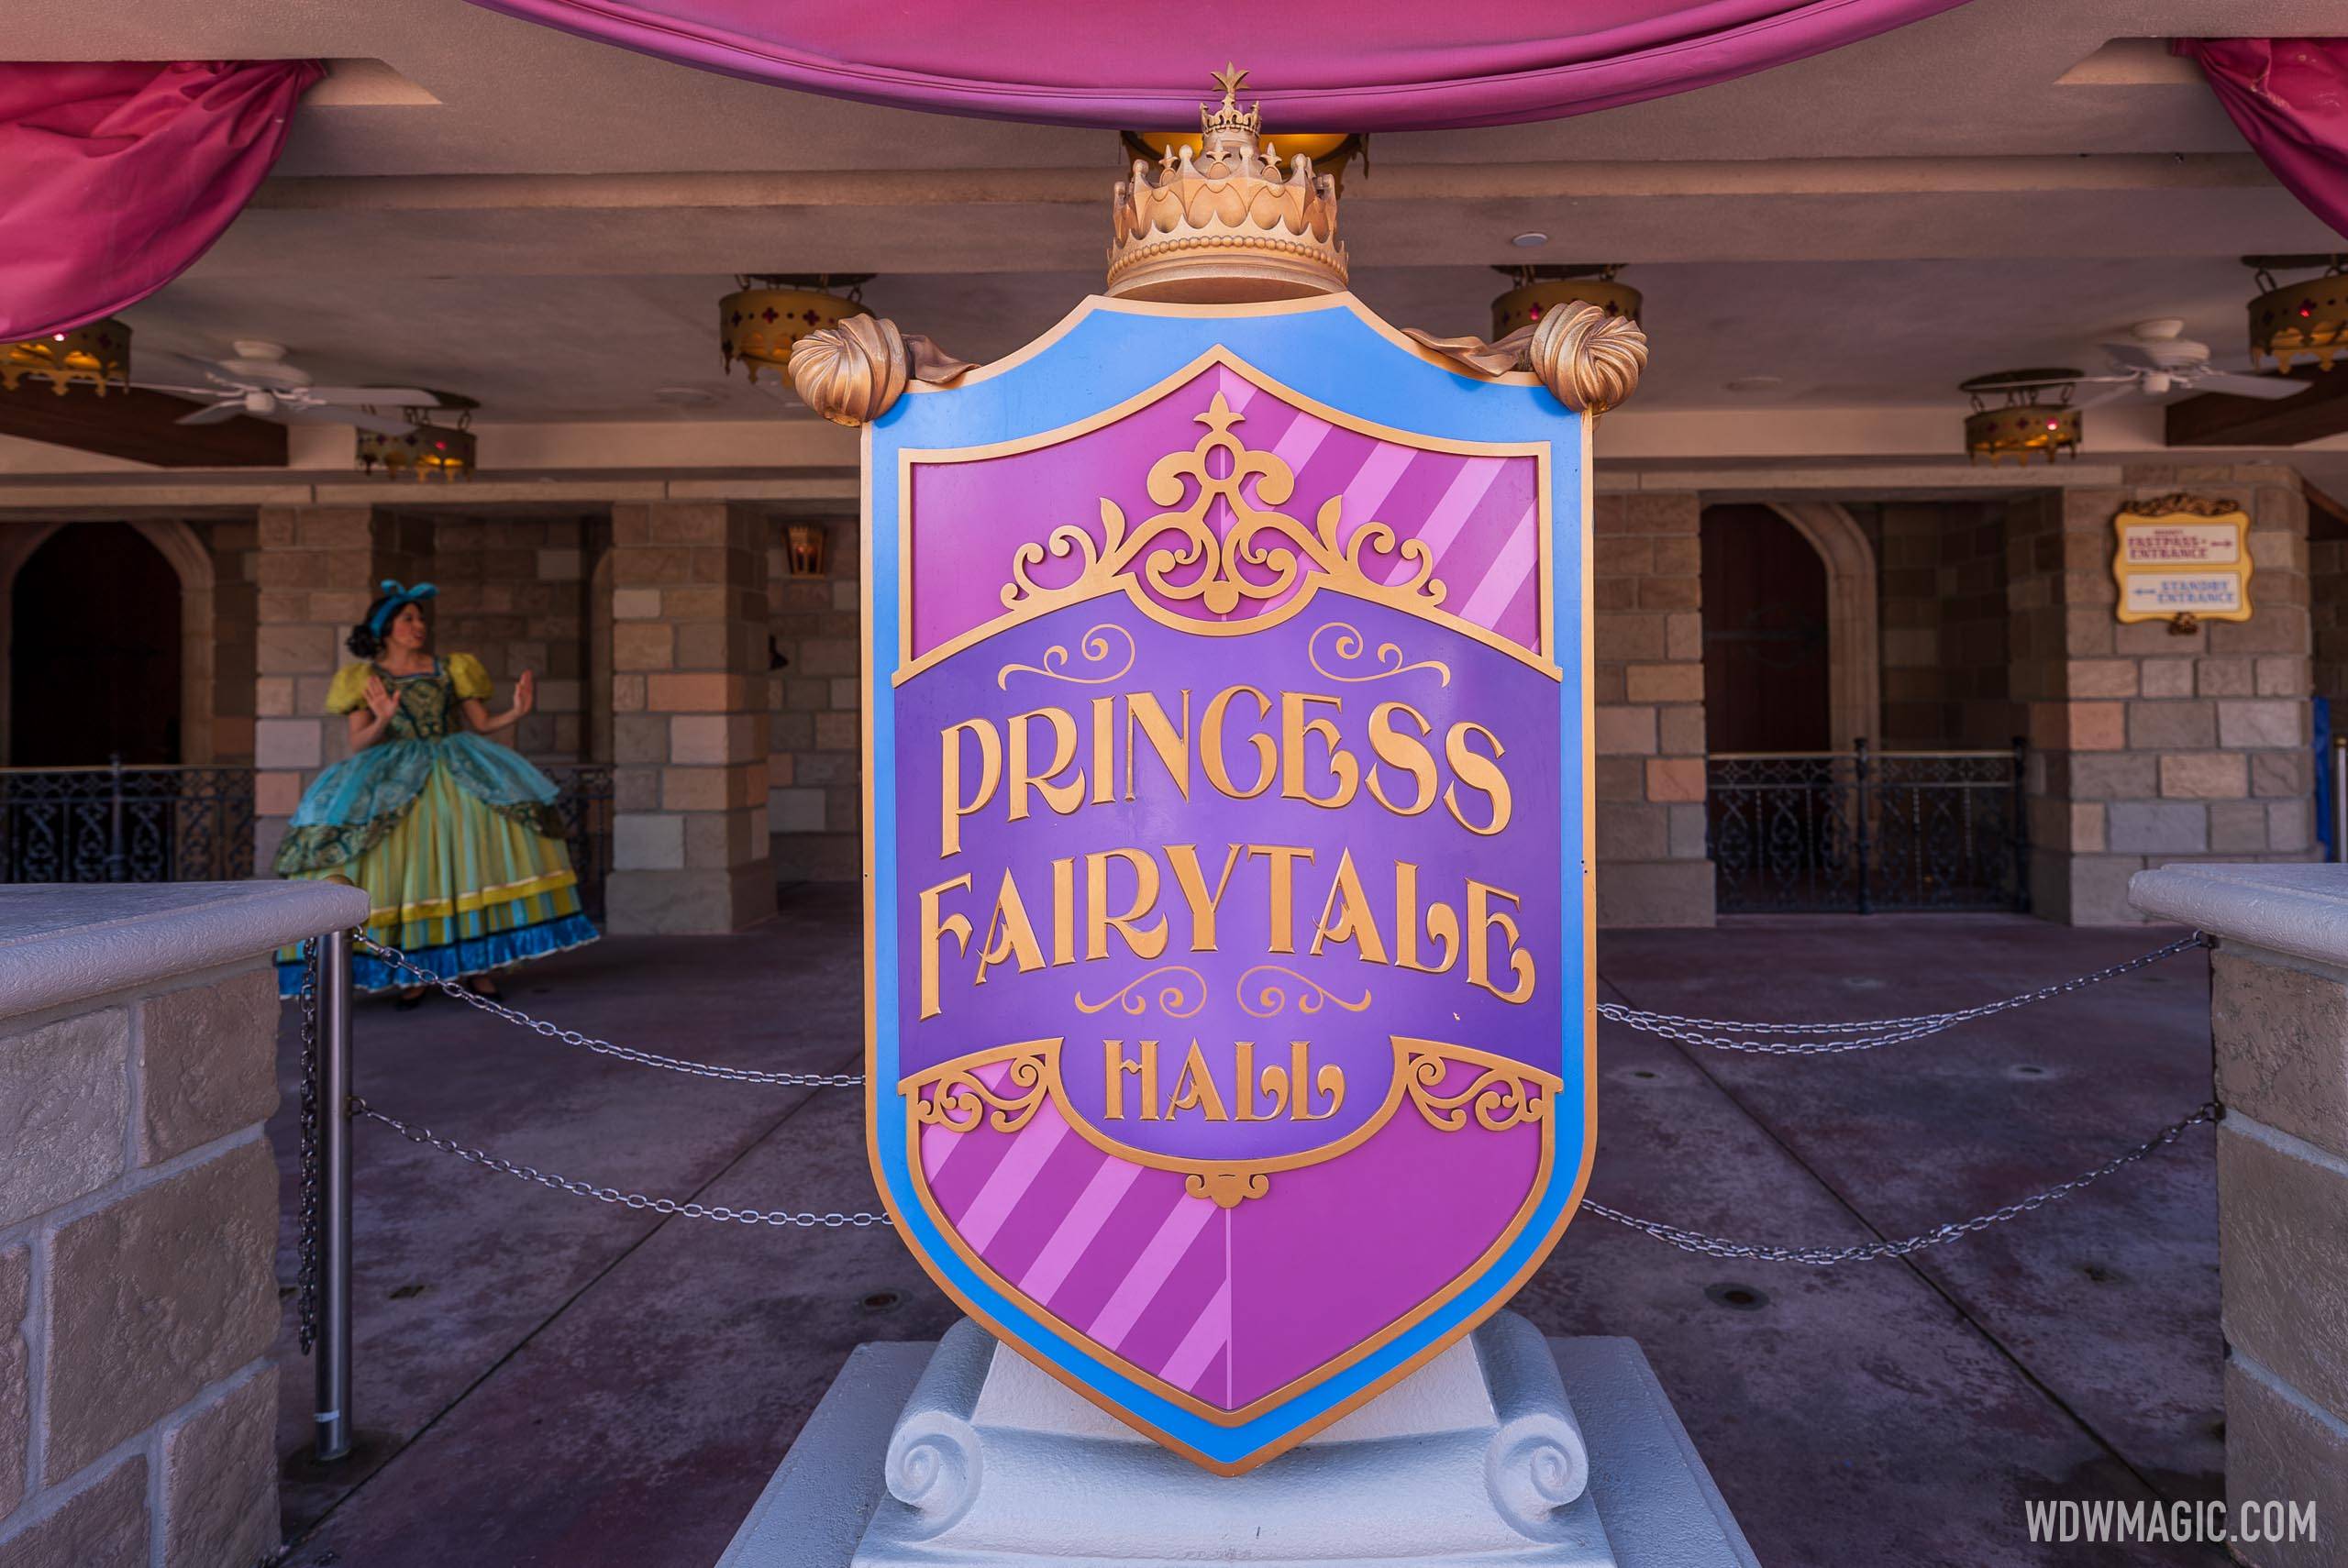 Princess Fairytale Hall overview